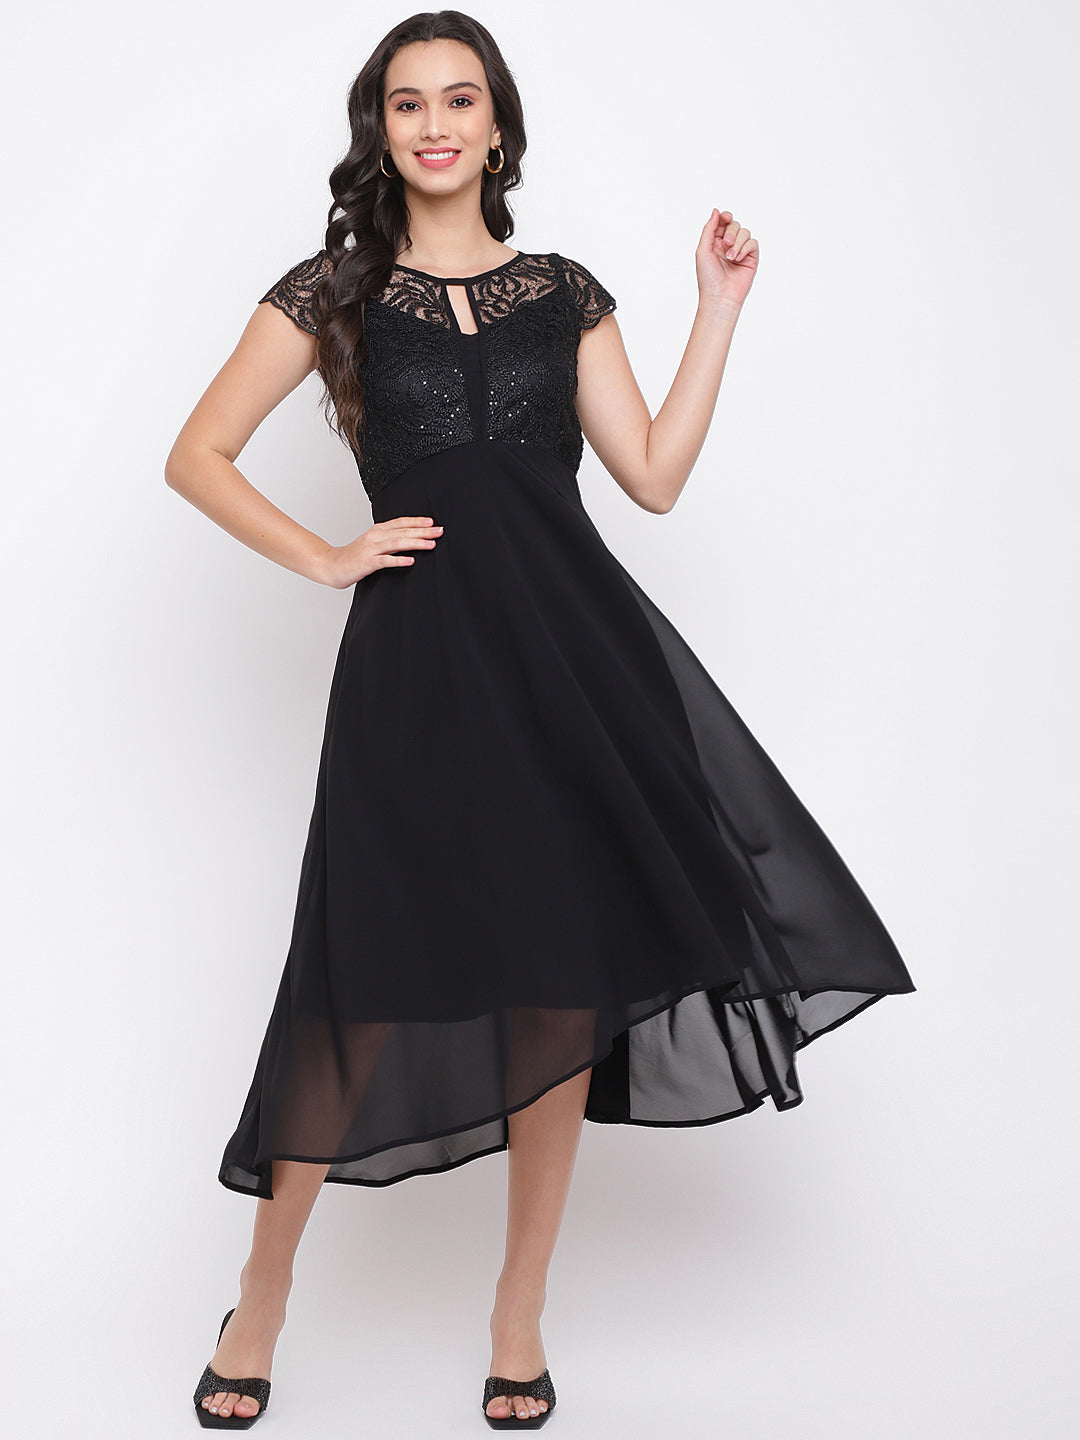 Black Cap Sleeve Maxi Dress With Pleats